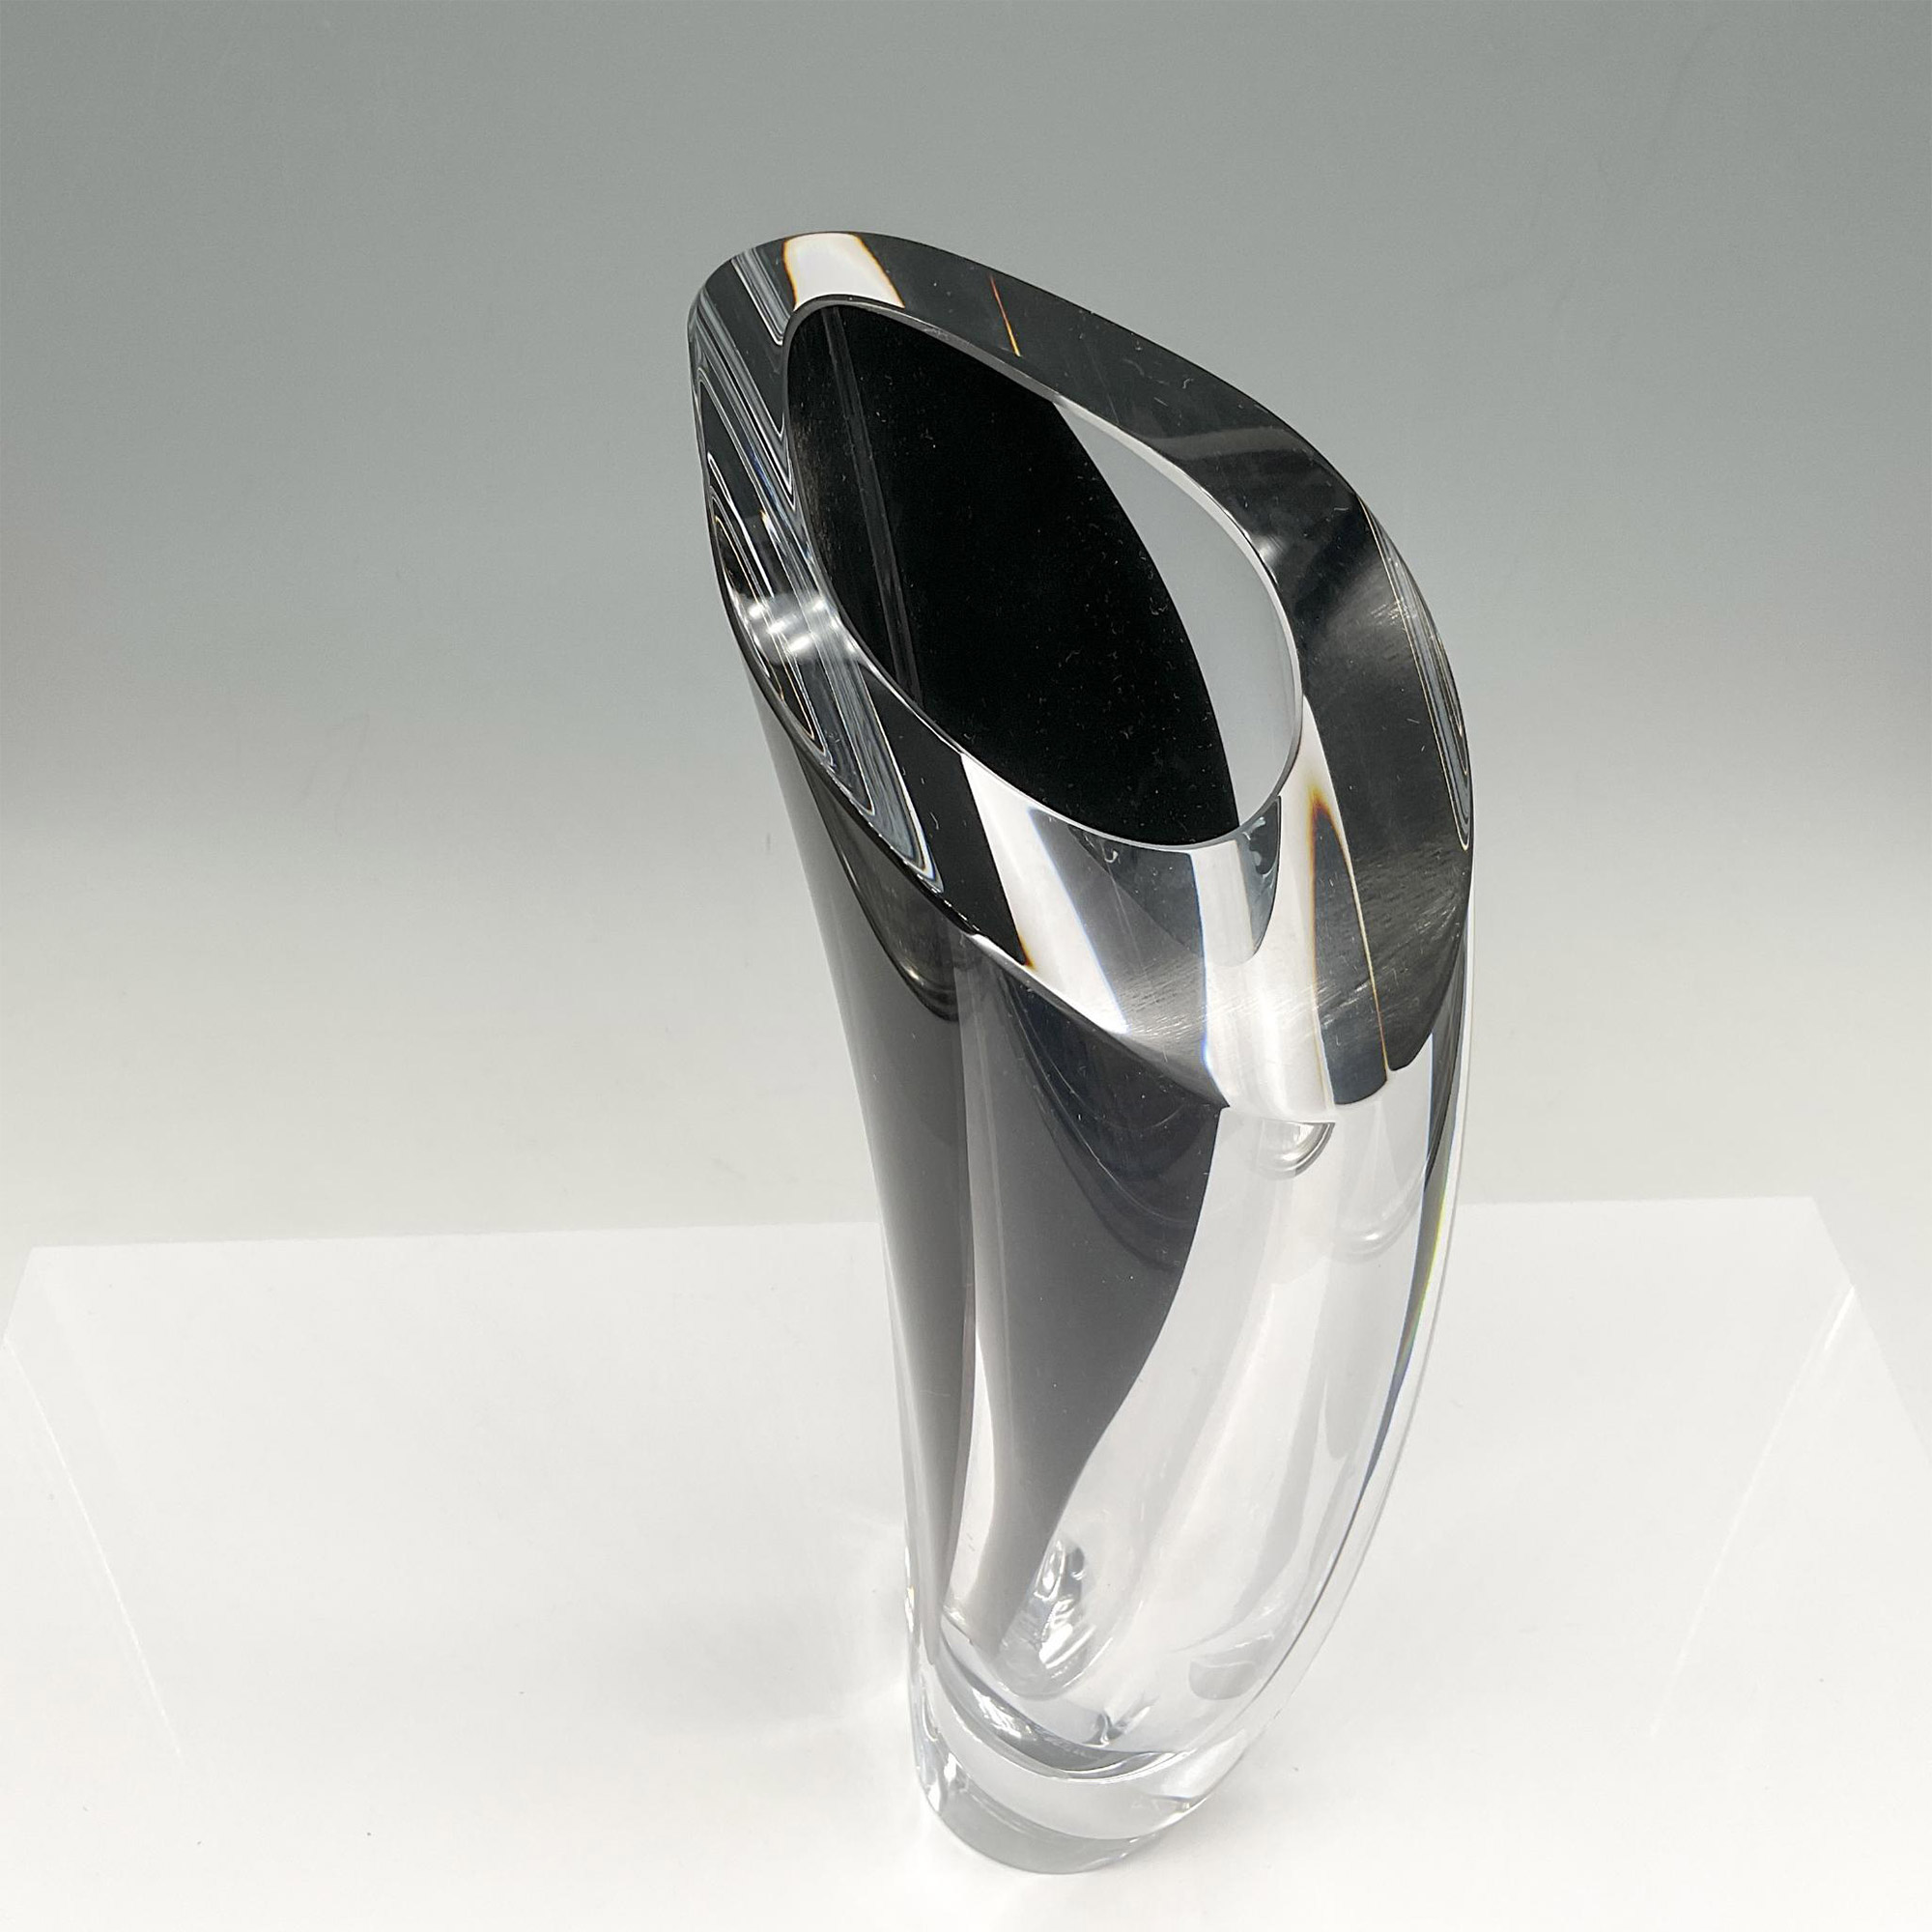 Kosta Boda Art Glass Vase, Aria Black - Image 3 of 4